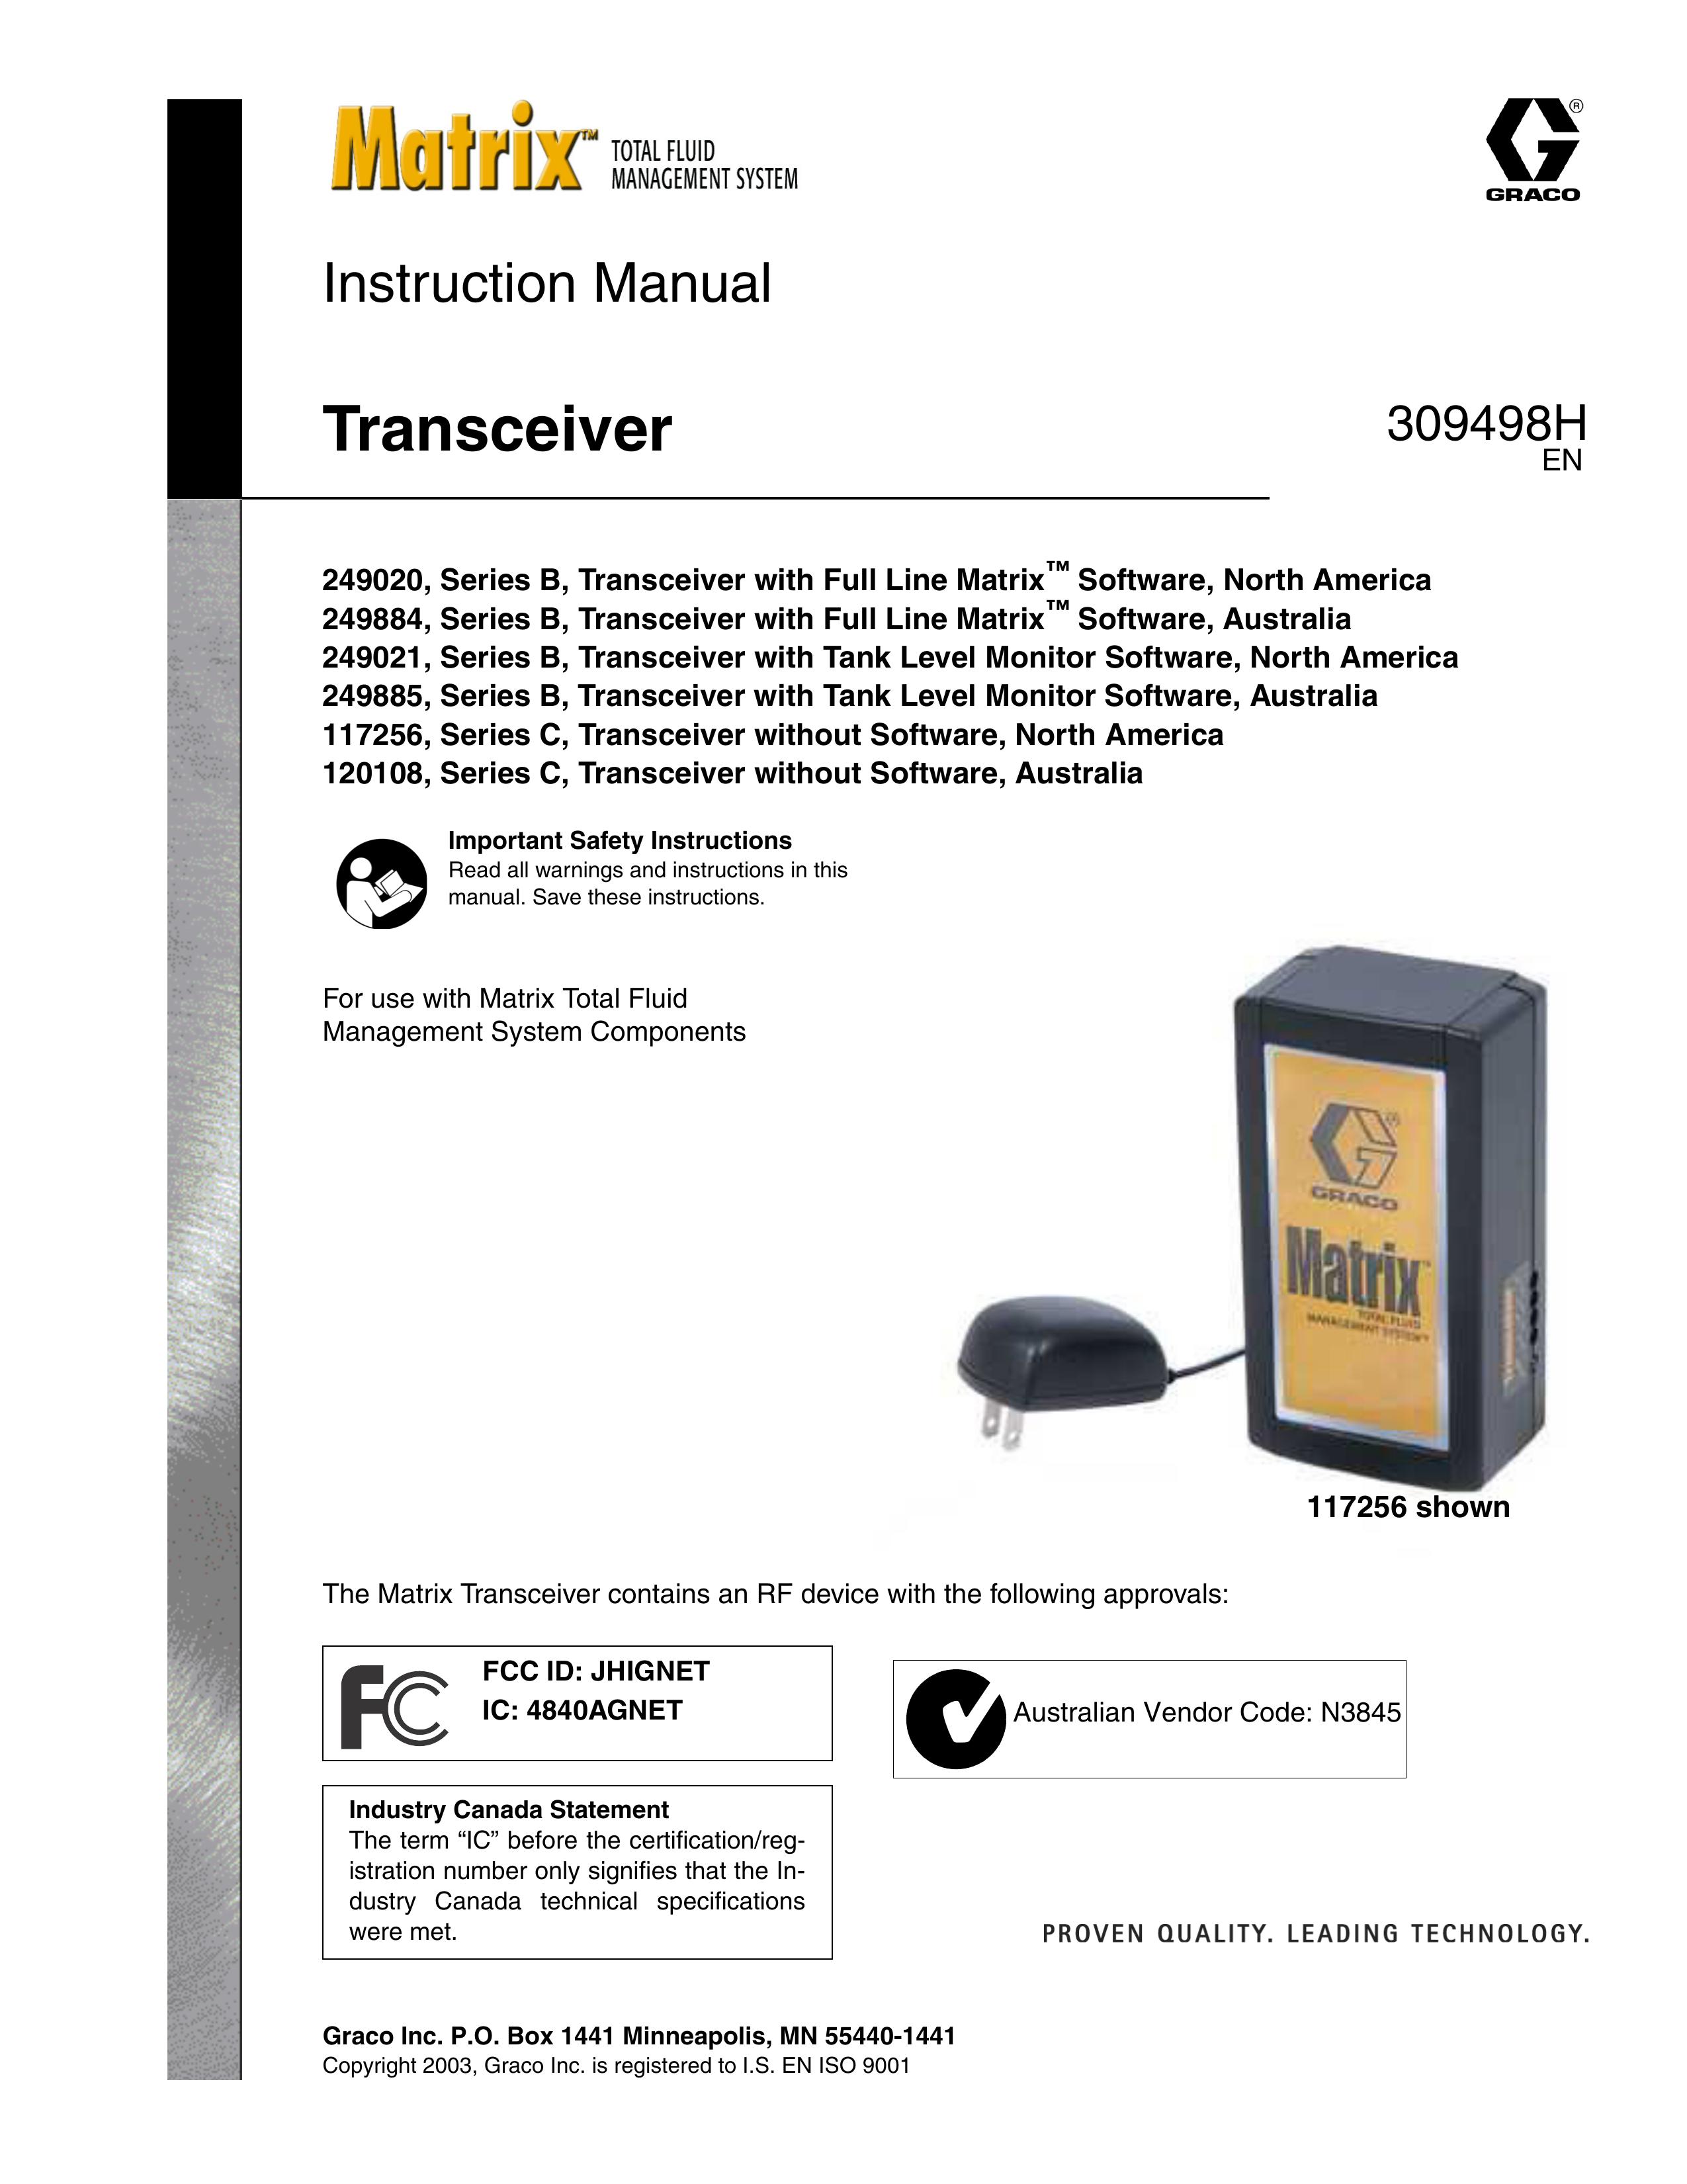 Graco 117256 Series C Marine Radio User Manual